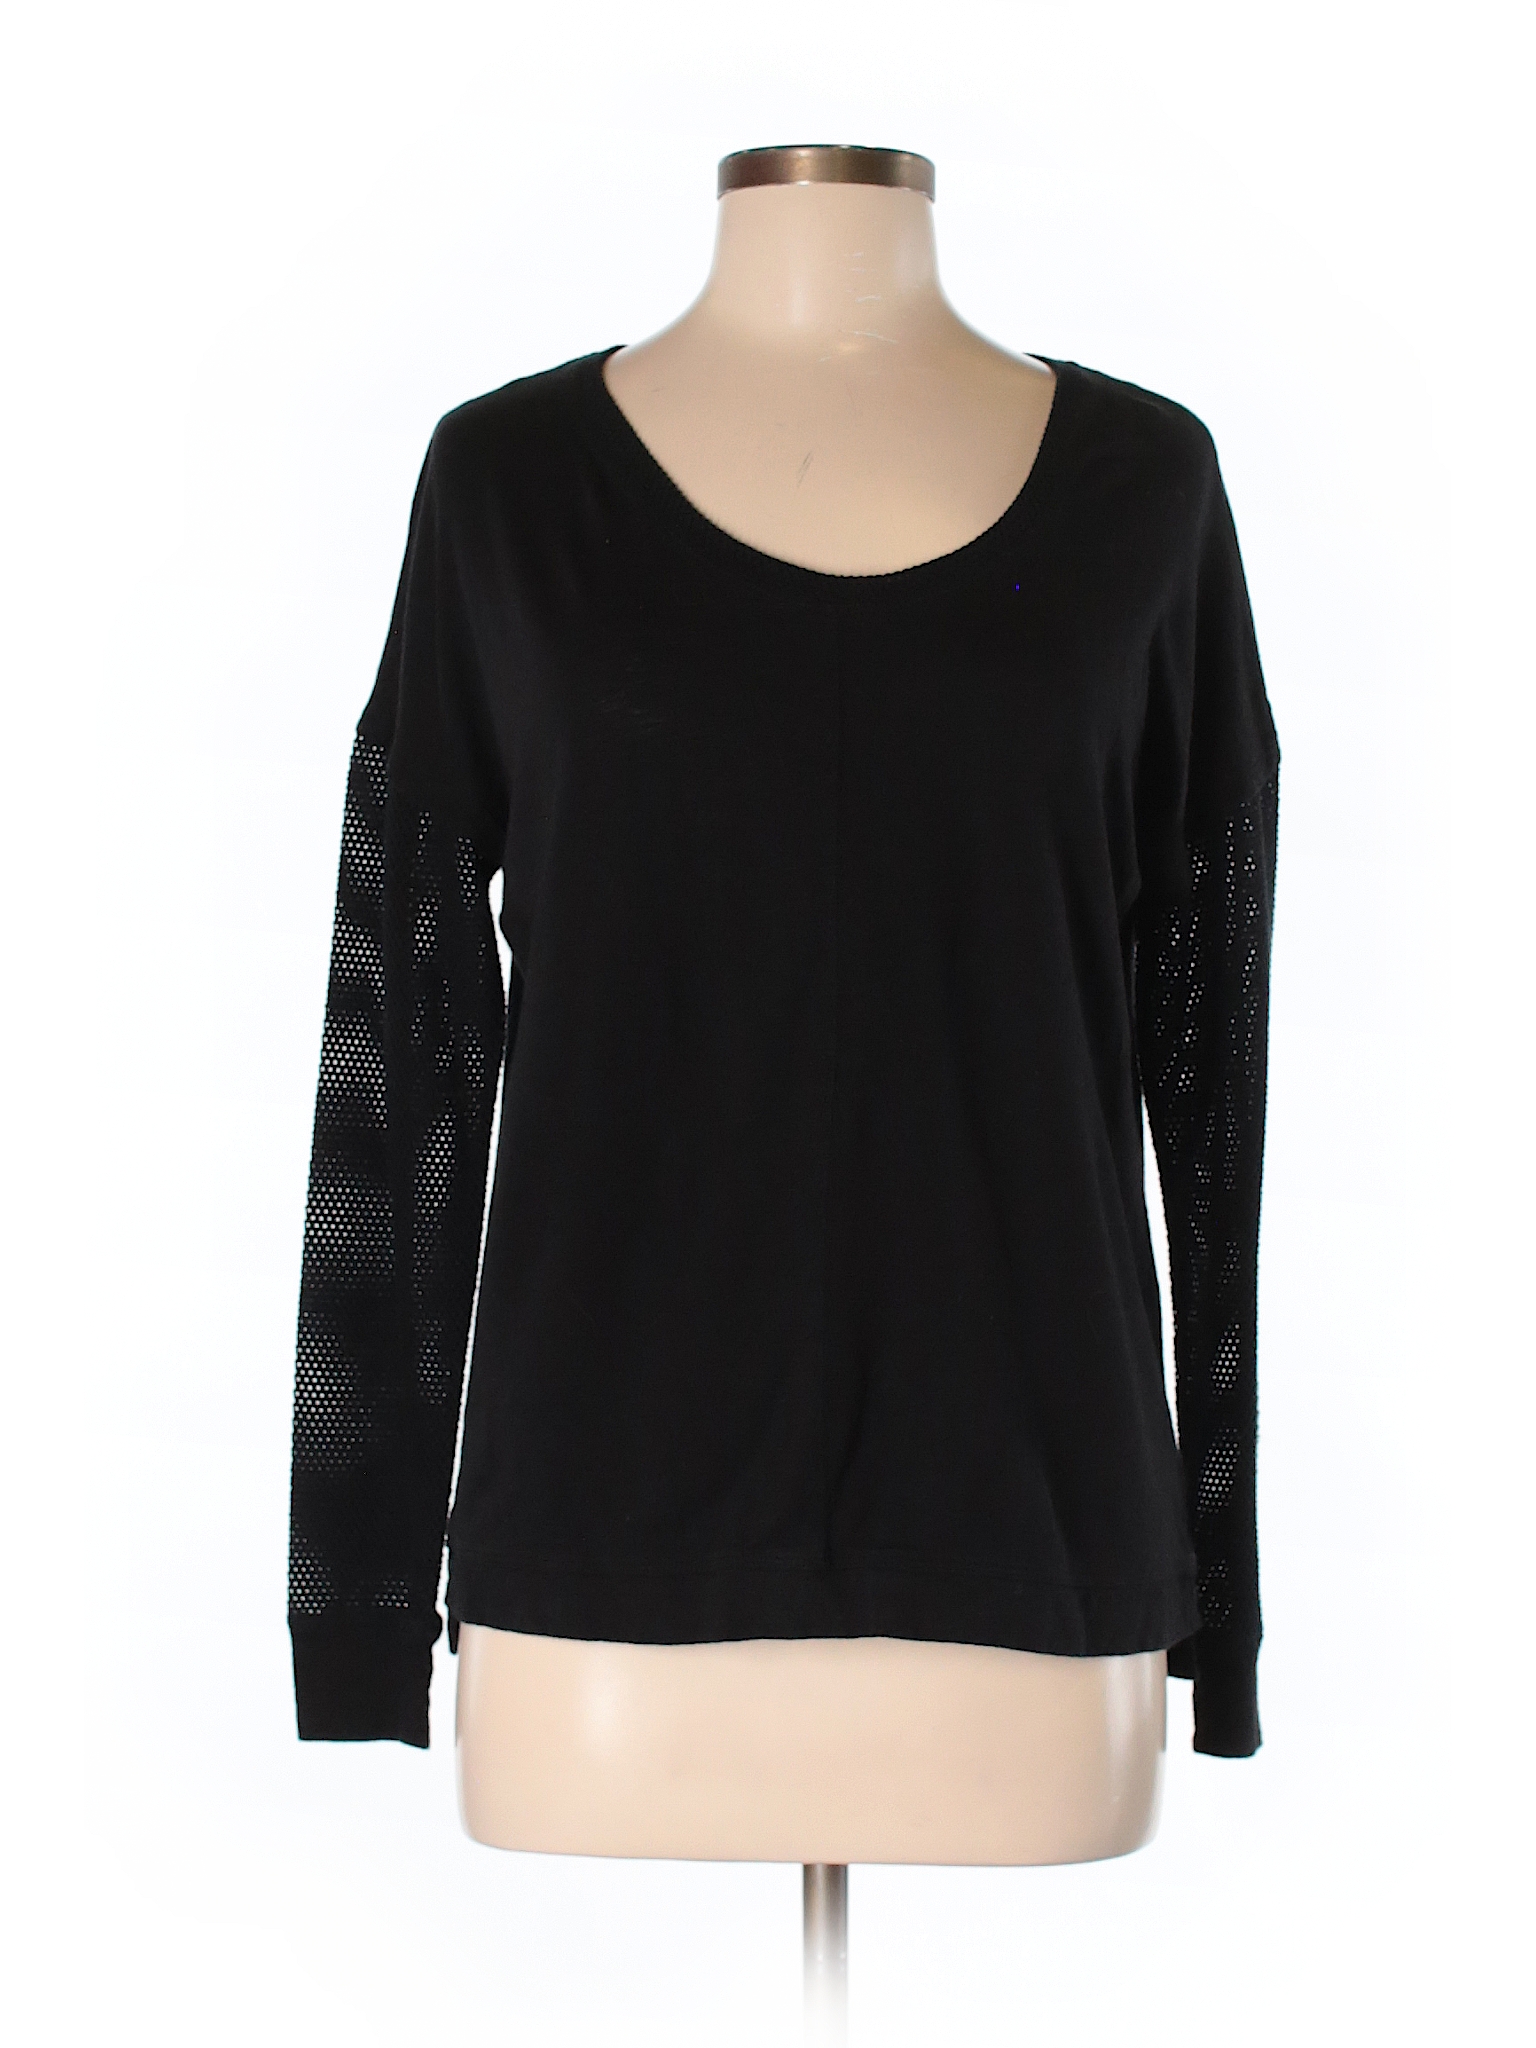 Cynthia Rowley TJX Solid Black Short Sleeve Top Size M - 66% off | ThredUp